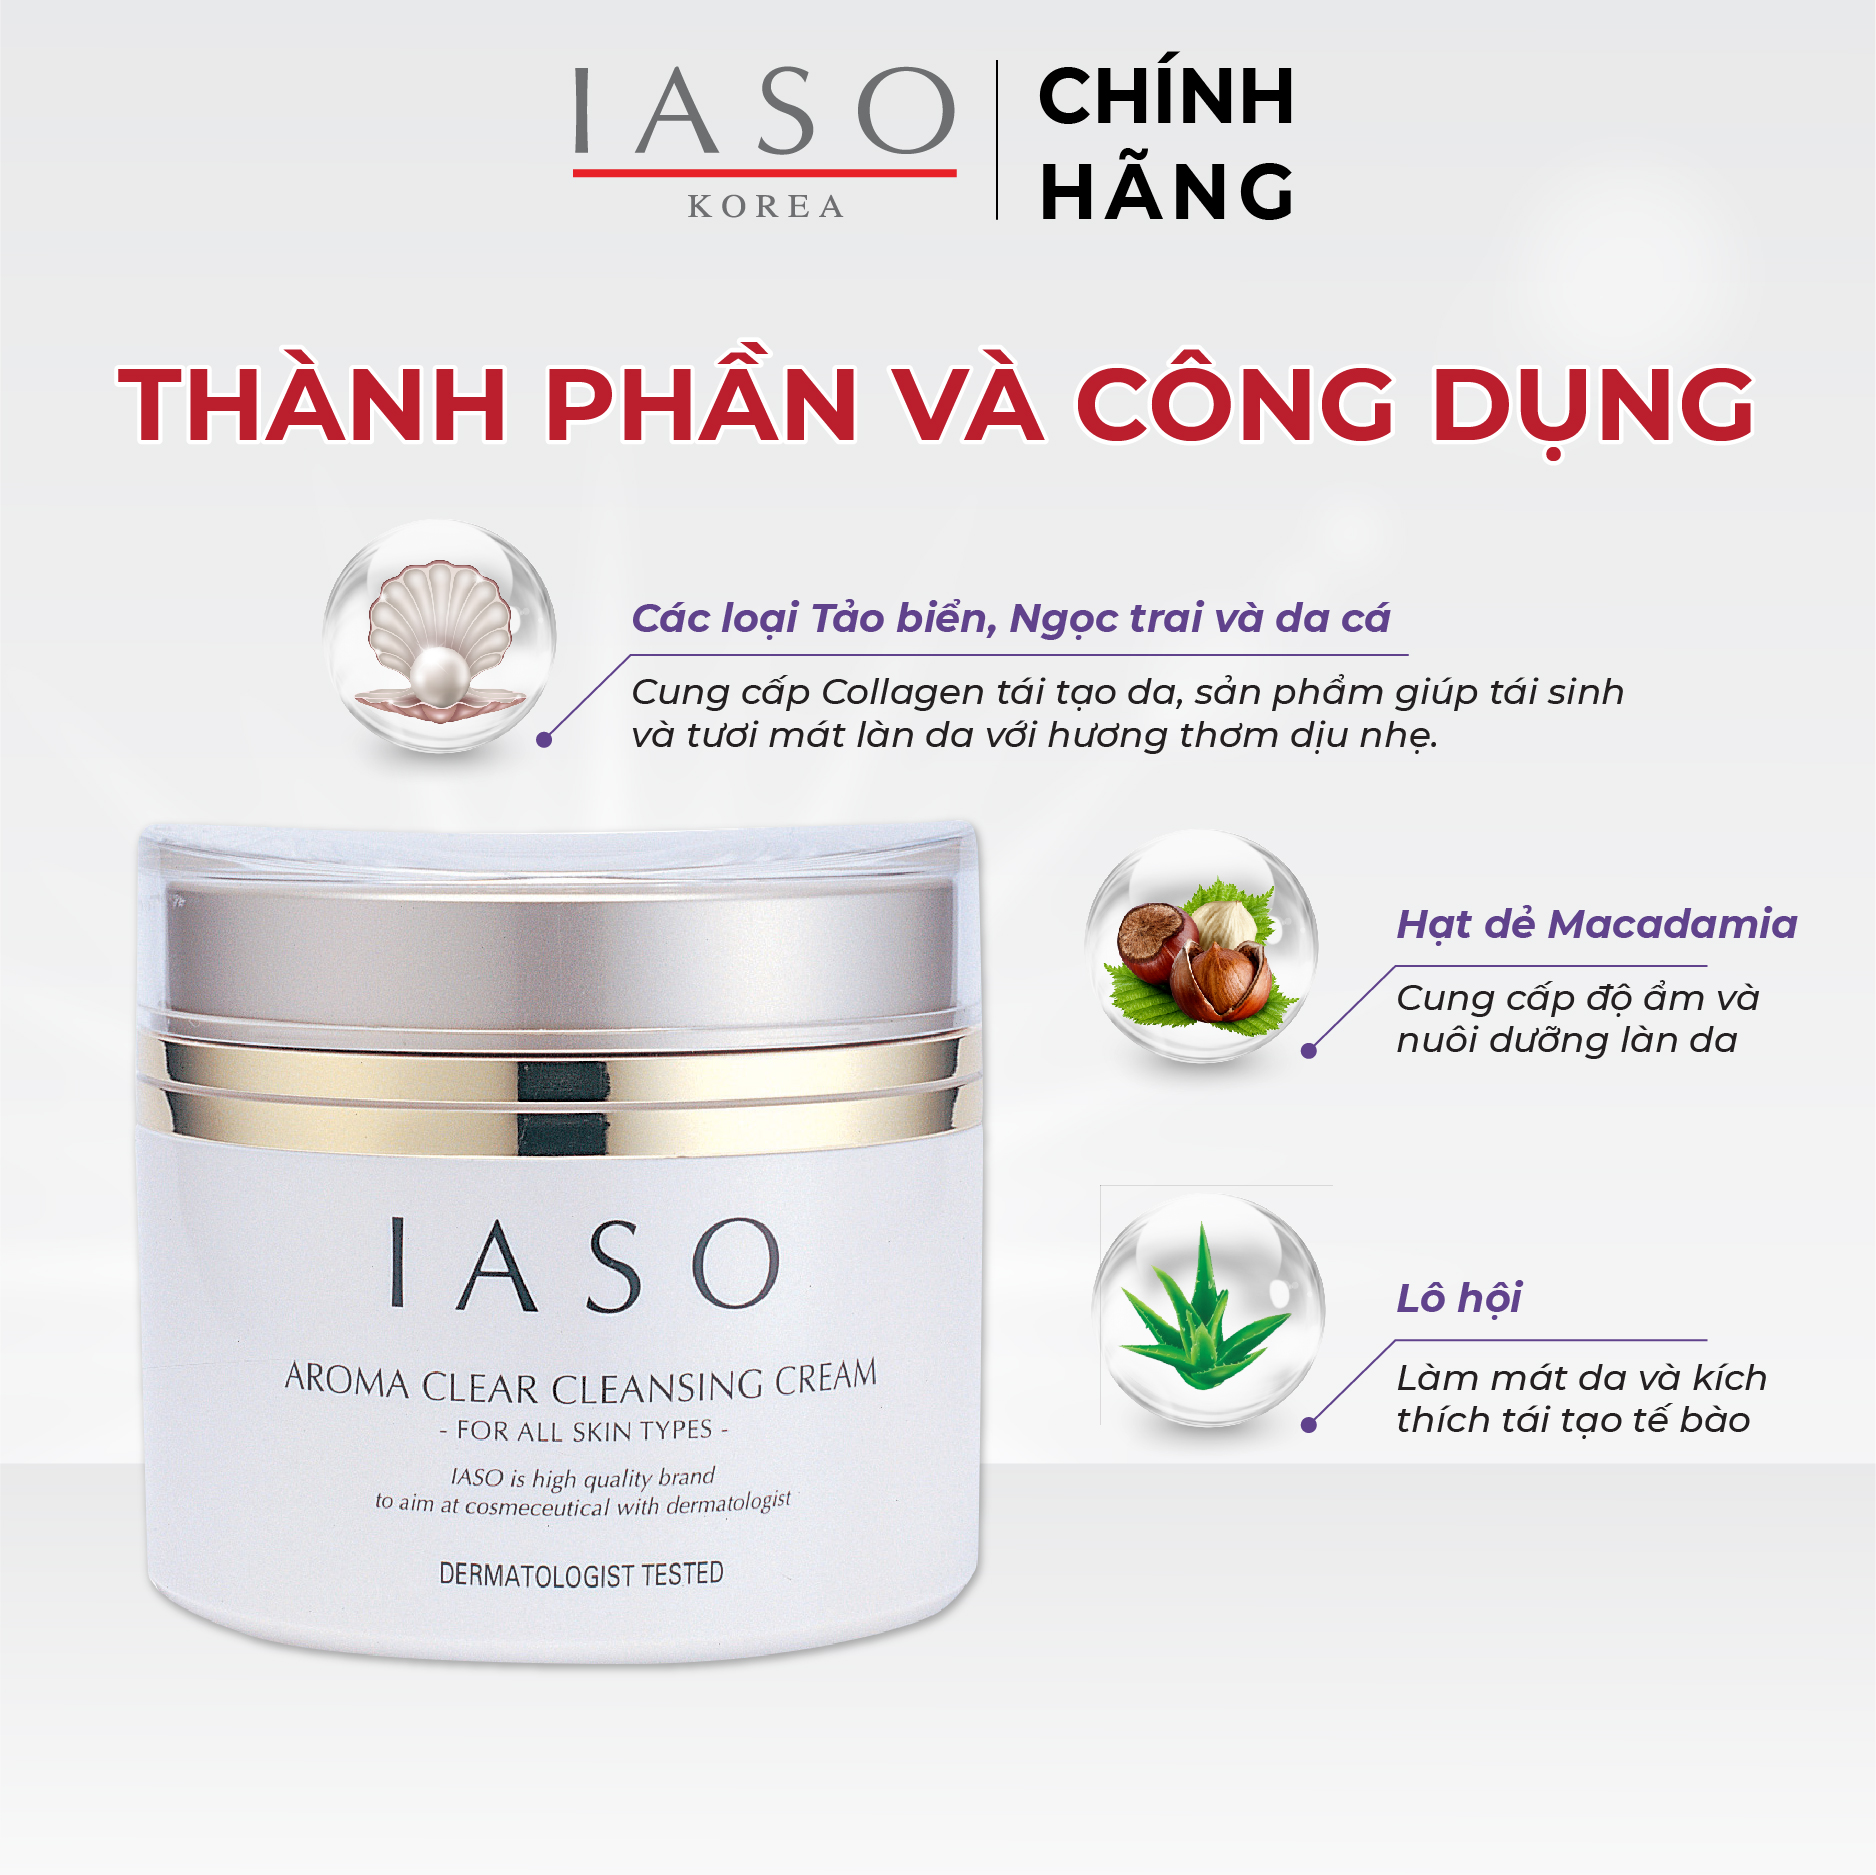 I02 Kem tẩy trang IASO Aroma Clear Cleansing Cream 250ml